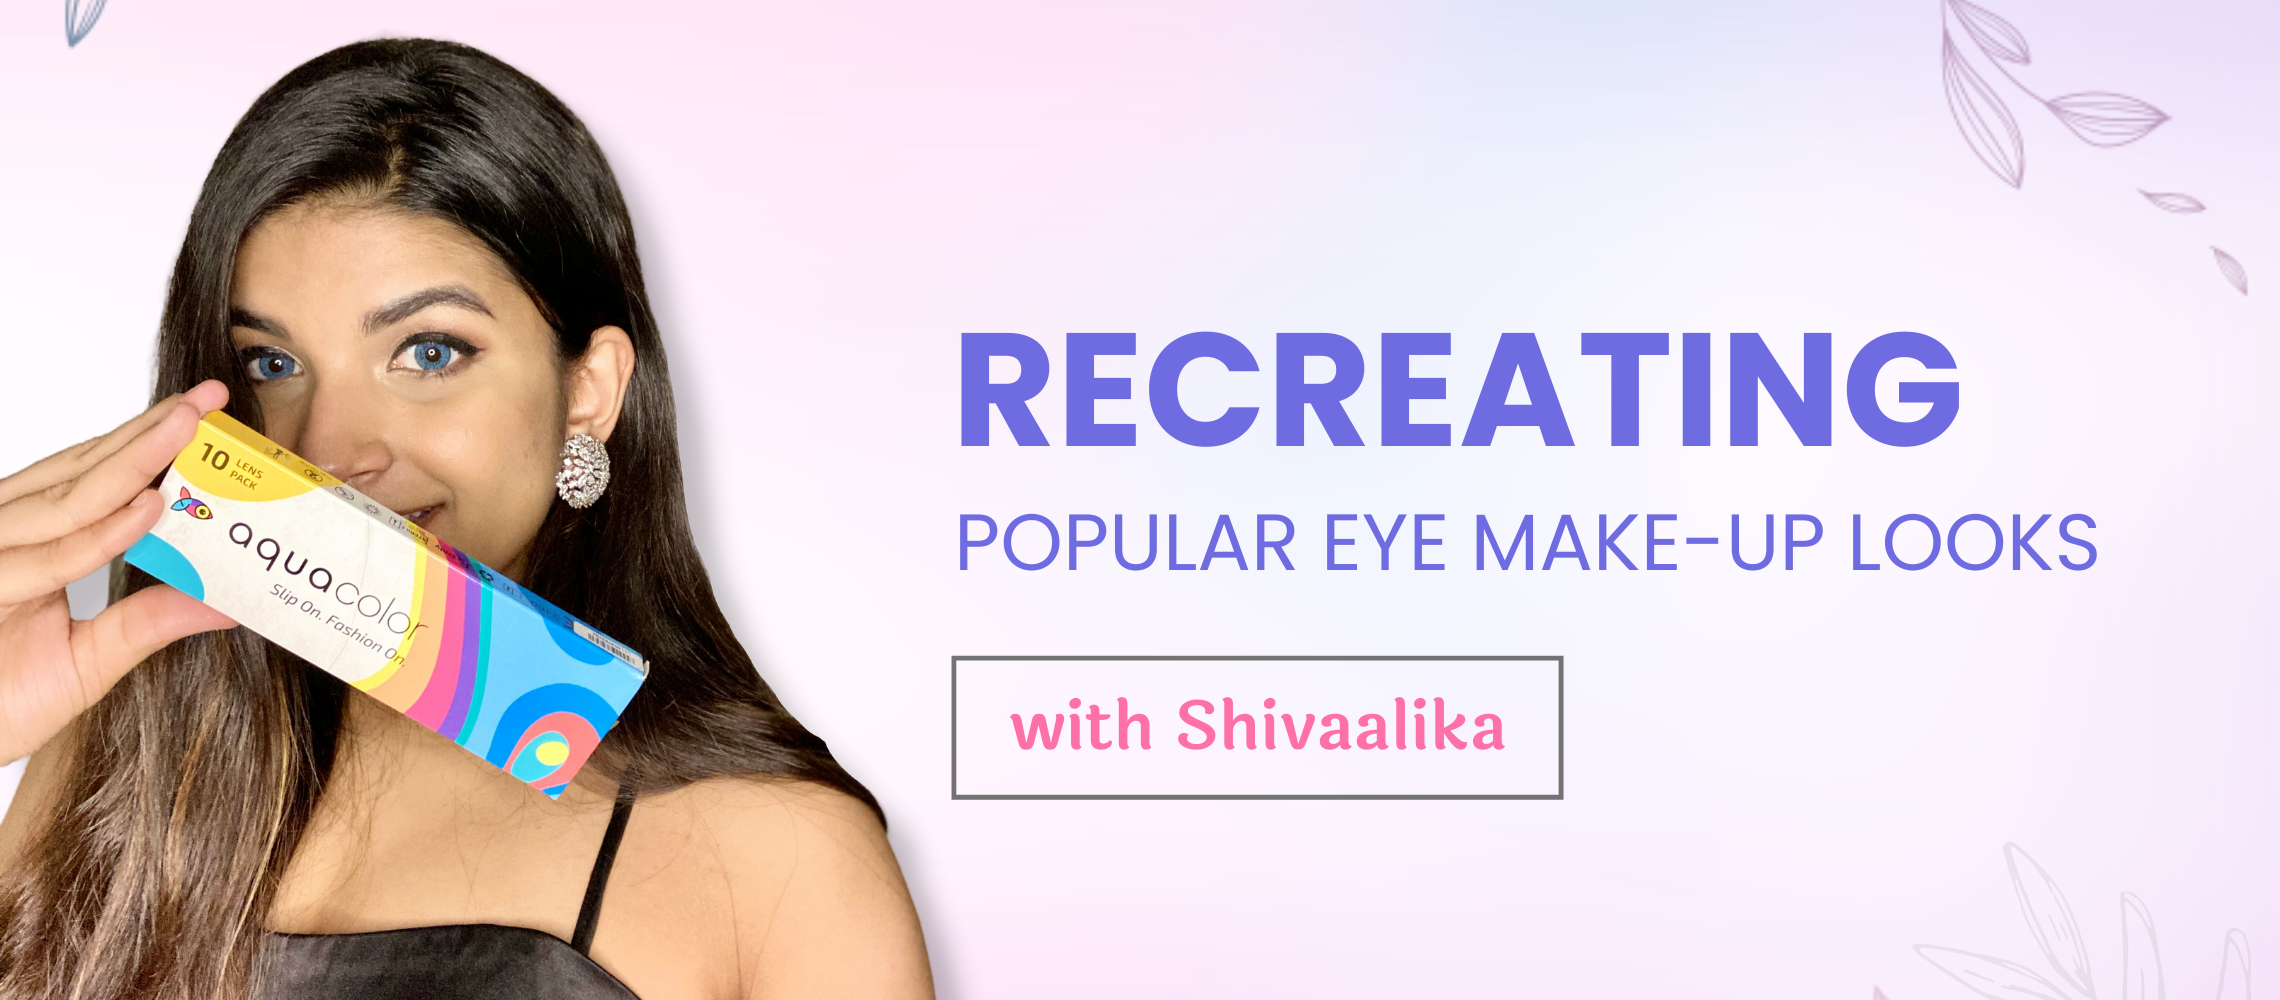 Recreating popular eye make up with Shivaalika